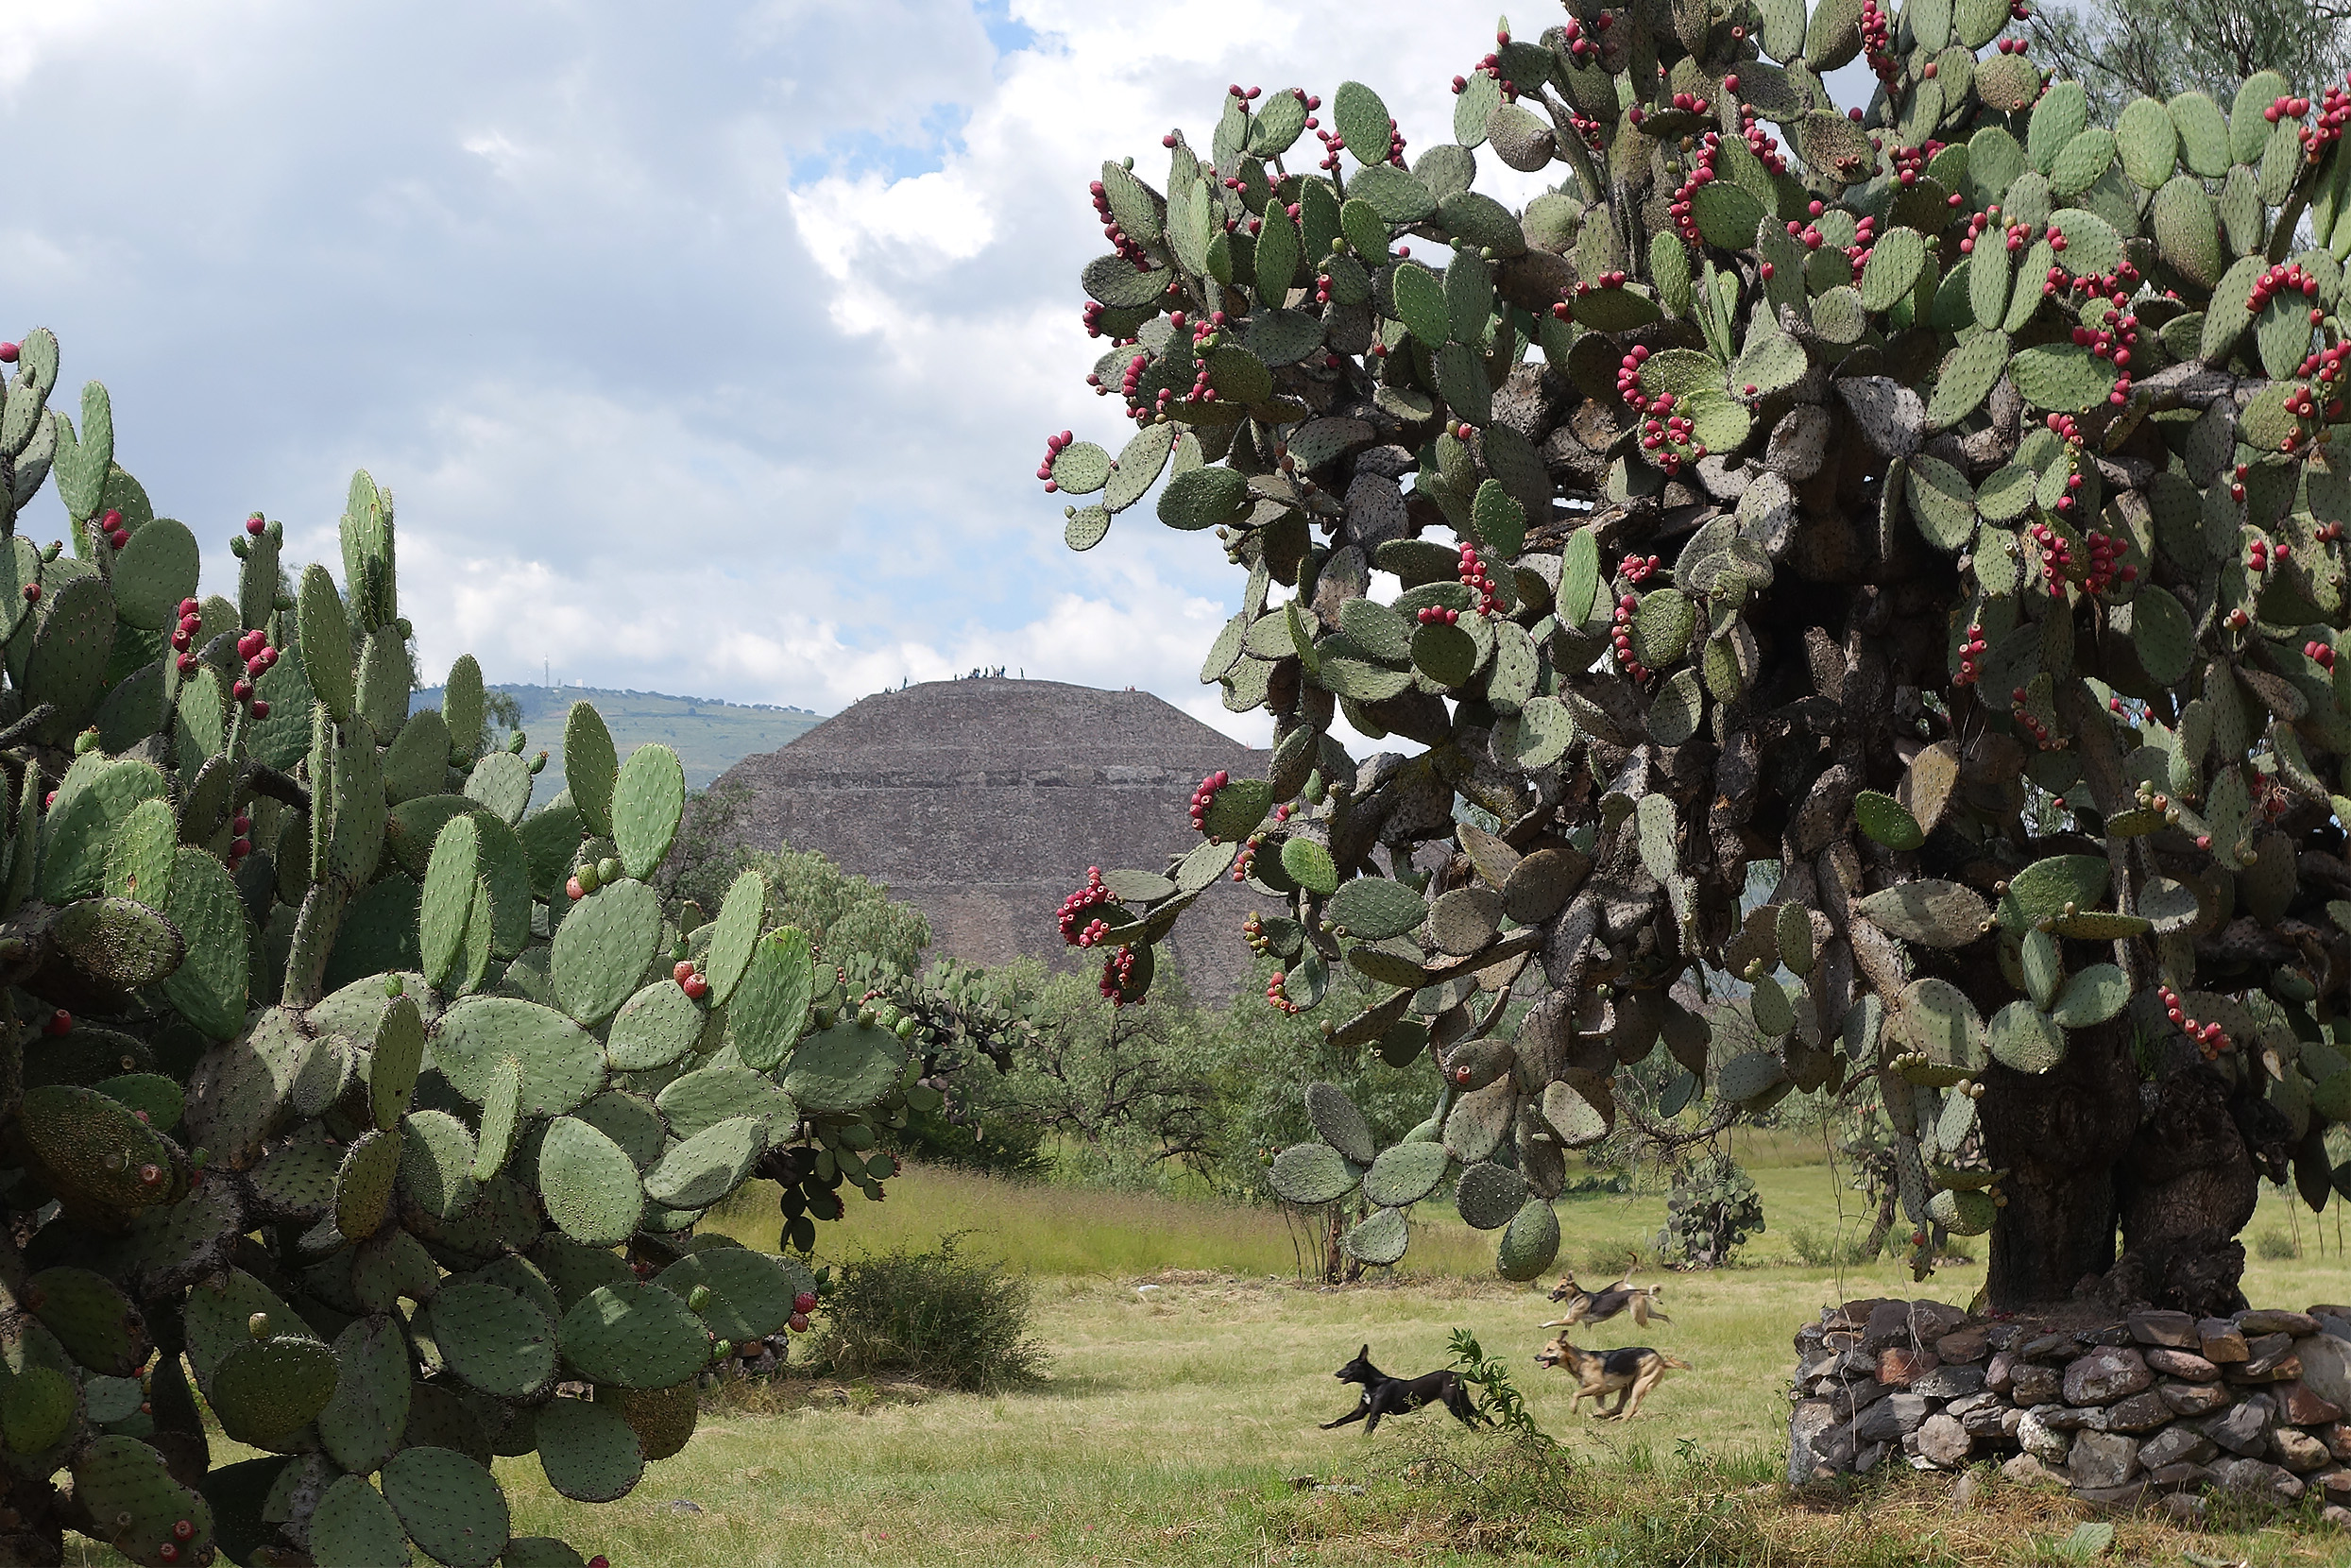 Canes Teotihuacanos